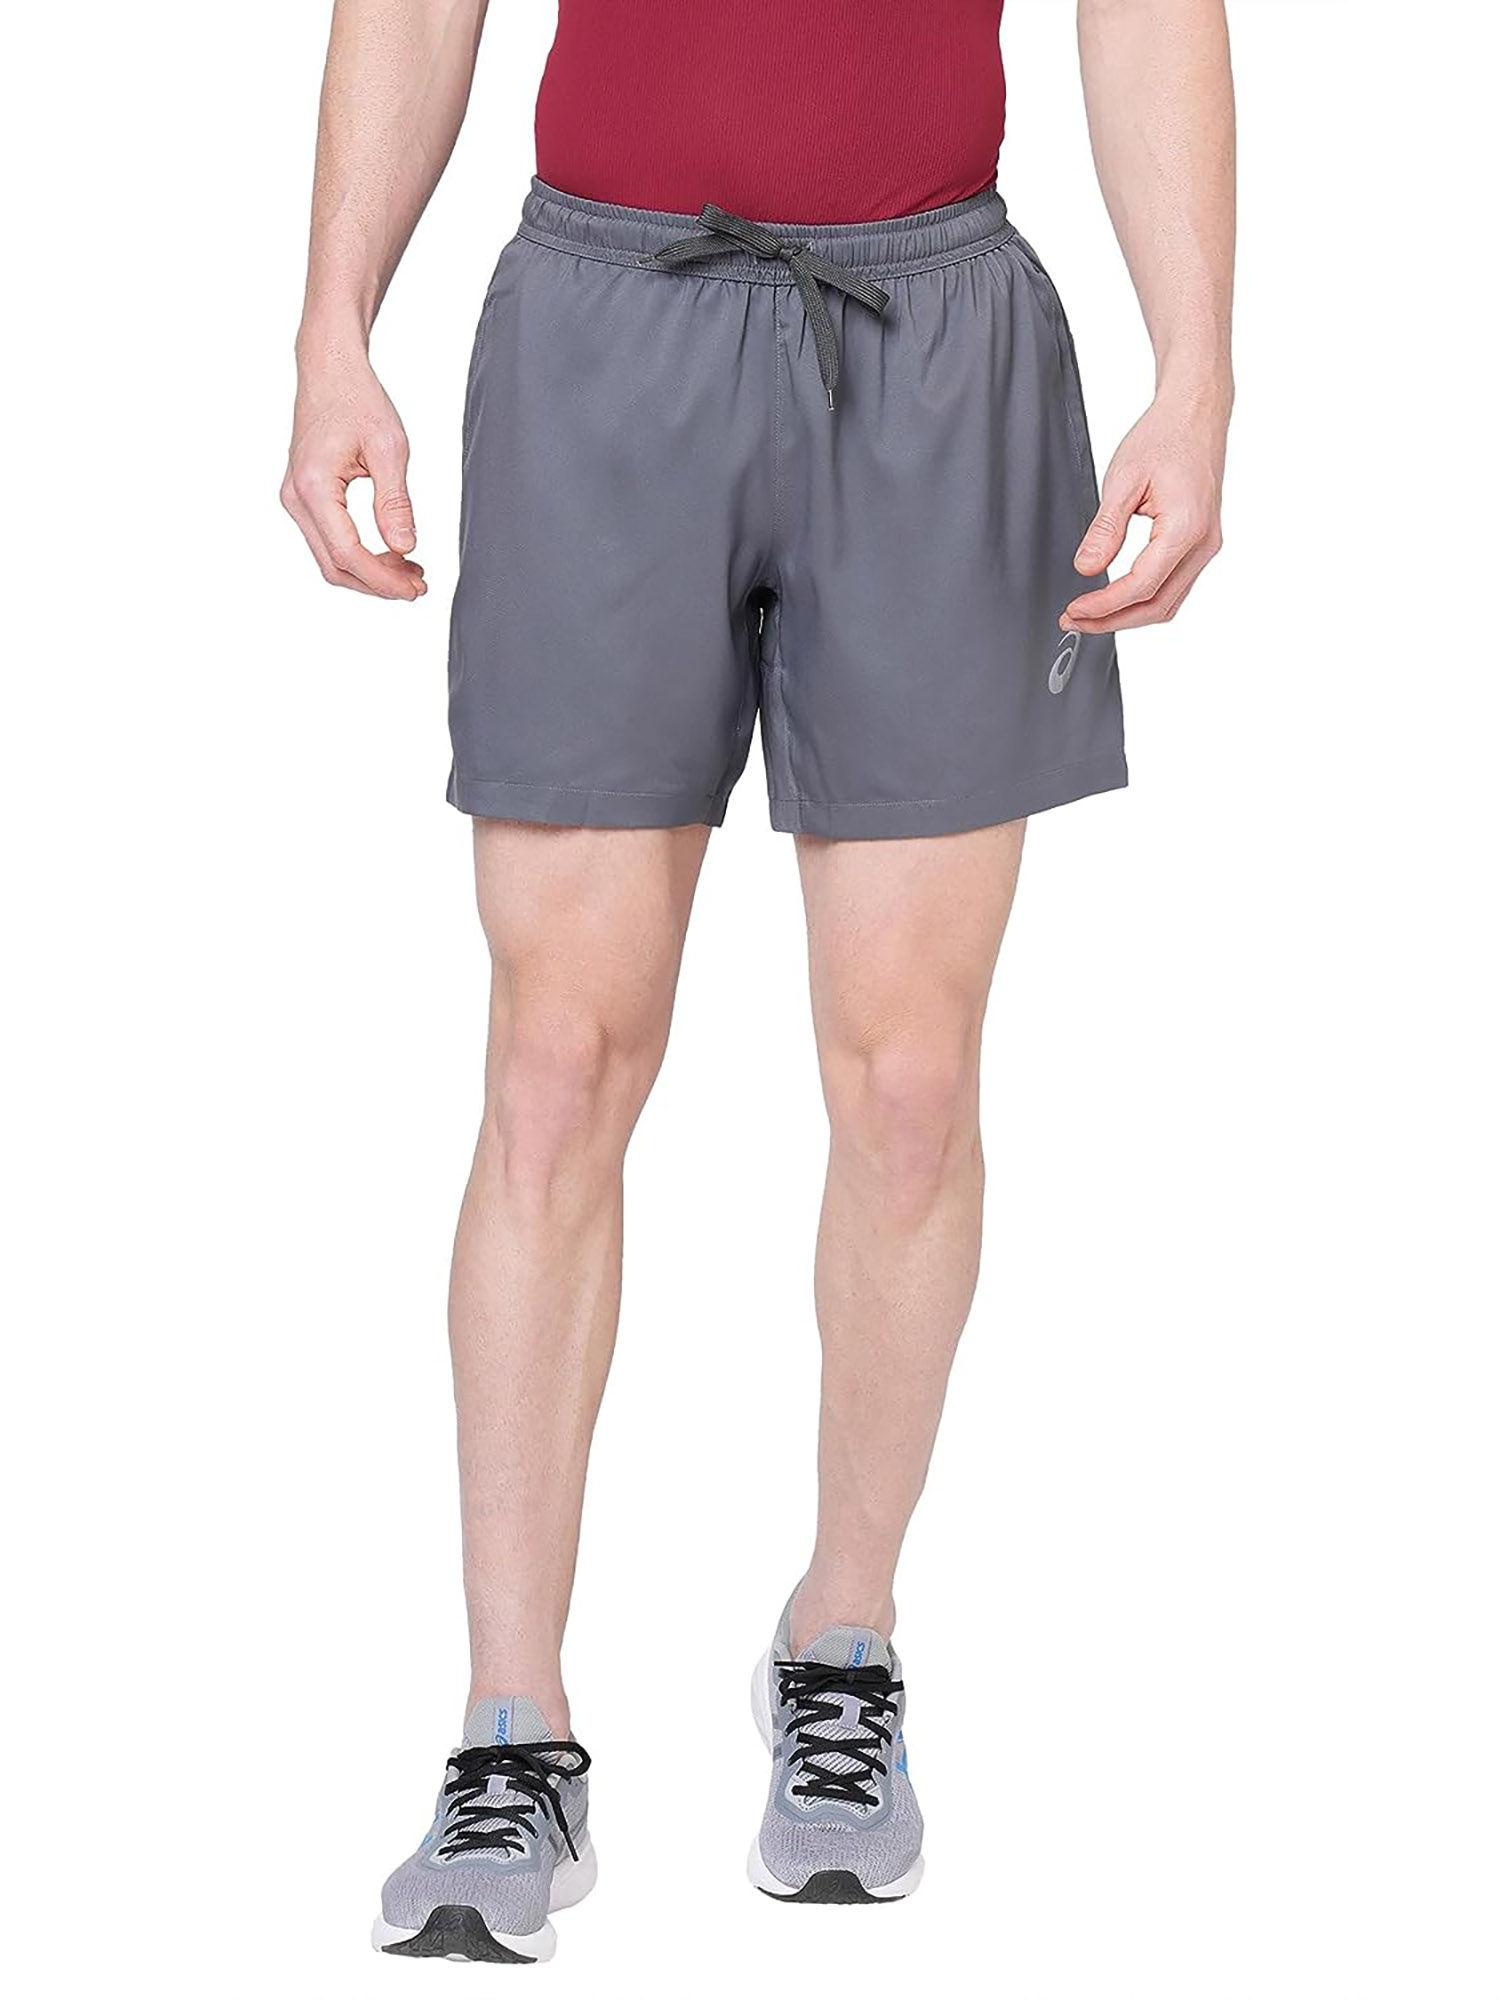 reflective-spiral-7in-inner-woven-grey-men-shorts